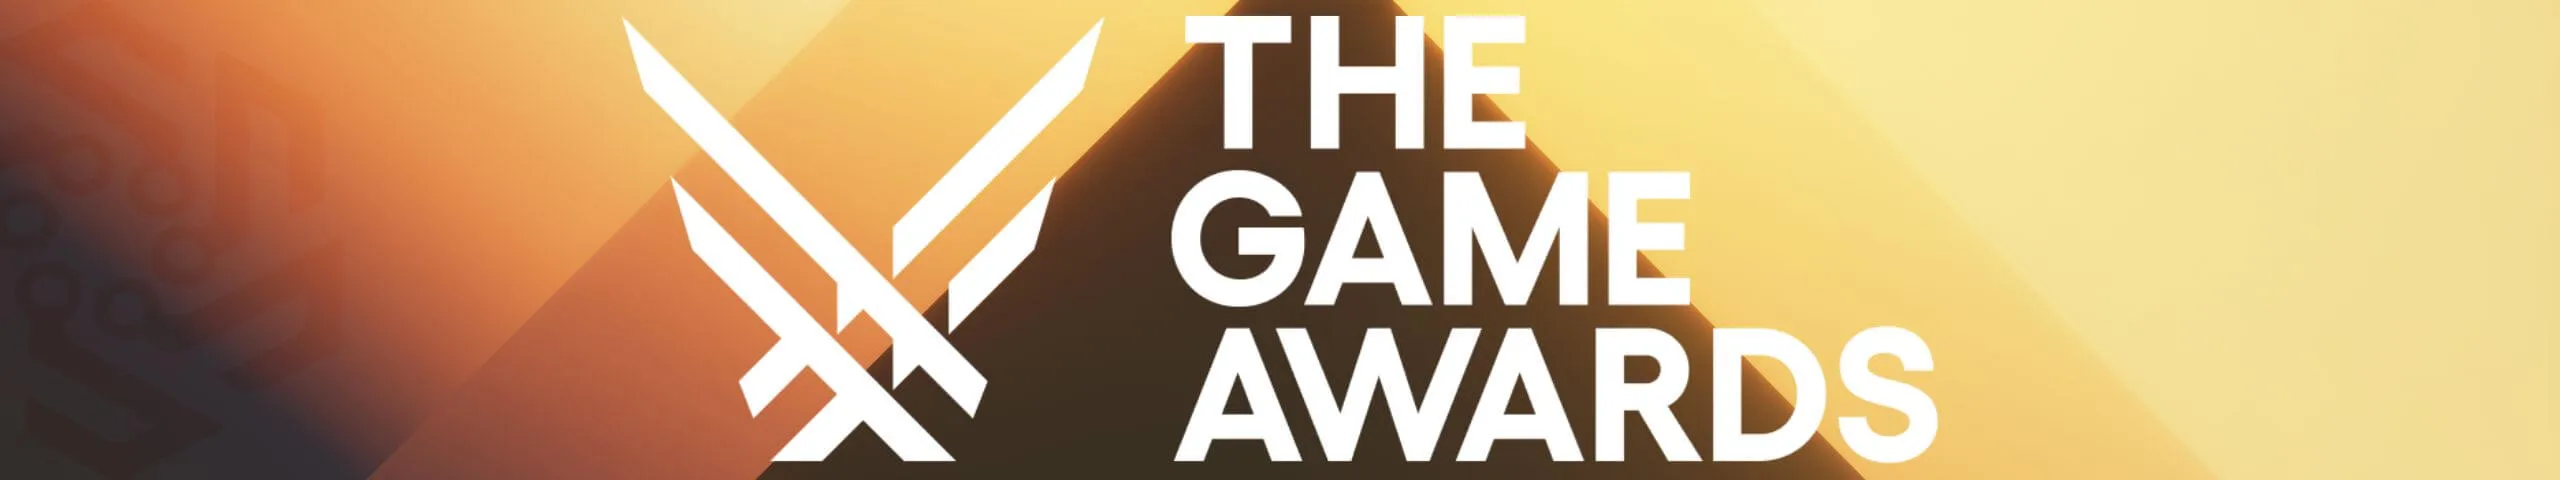 the game awards tiny